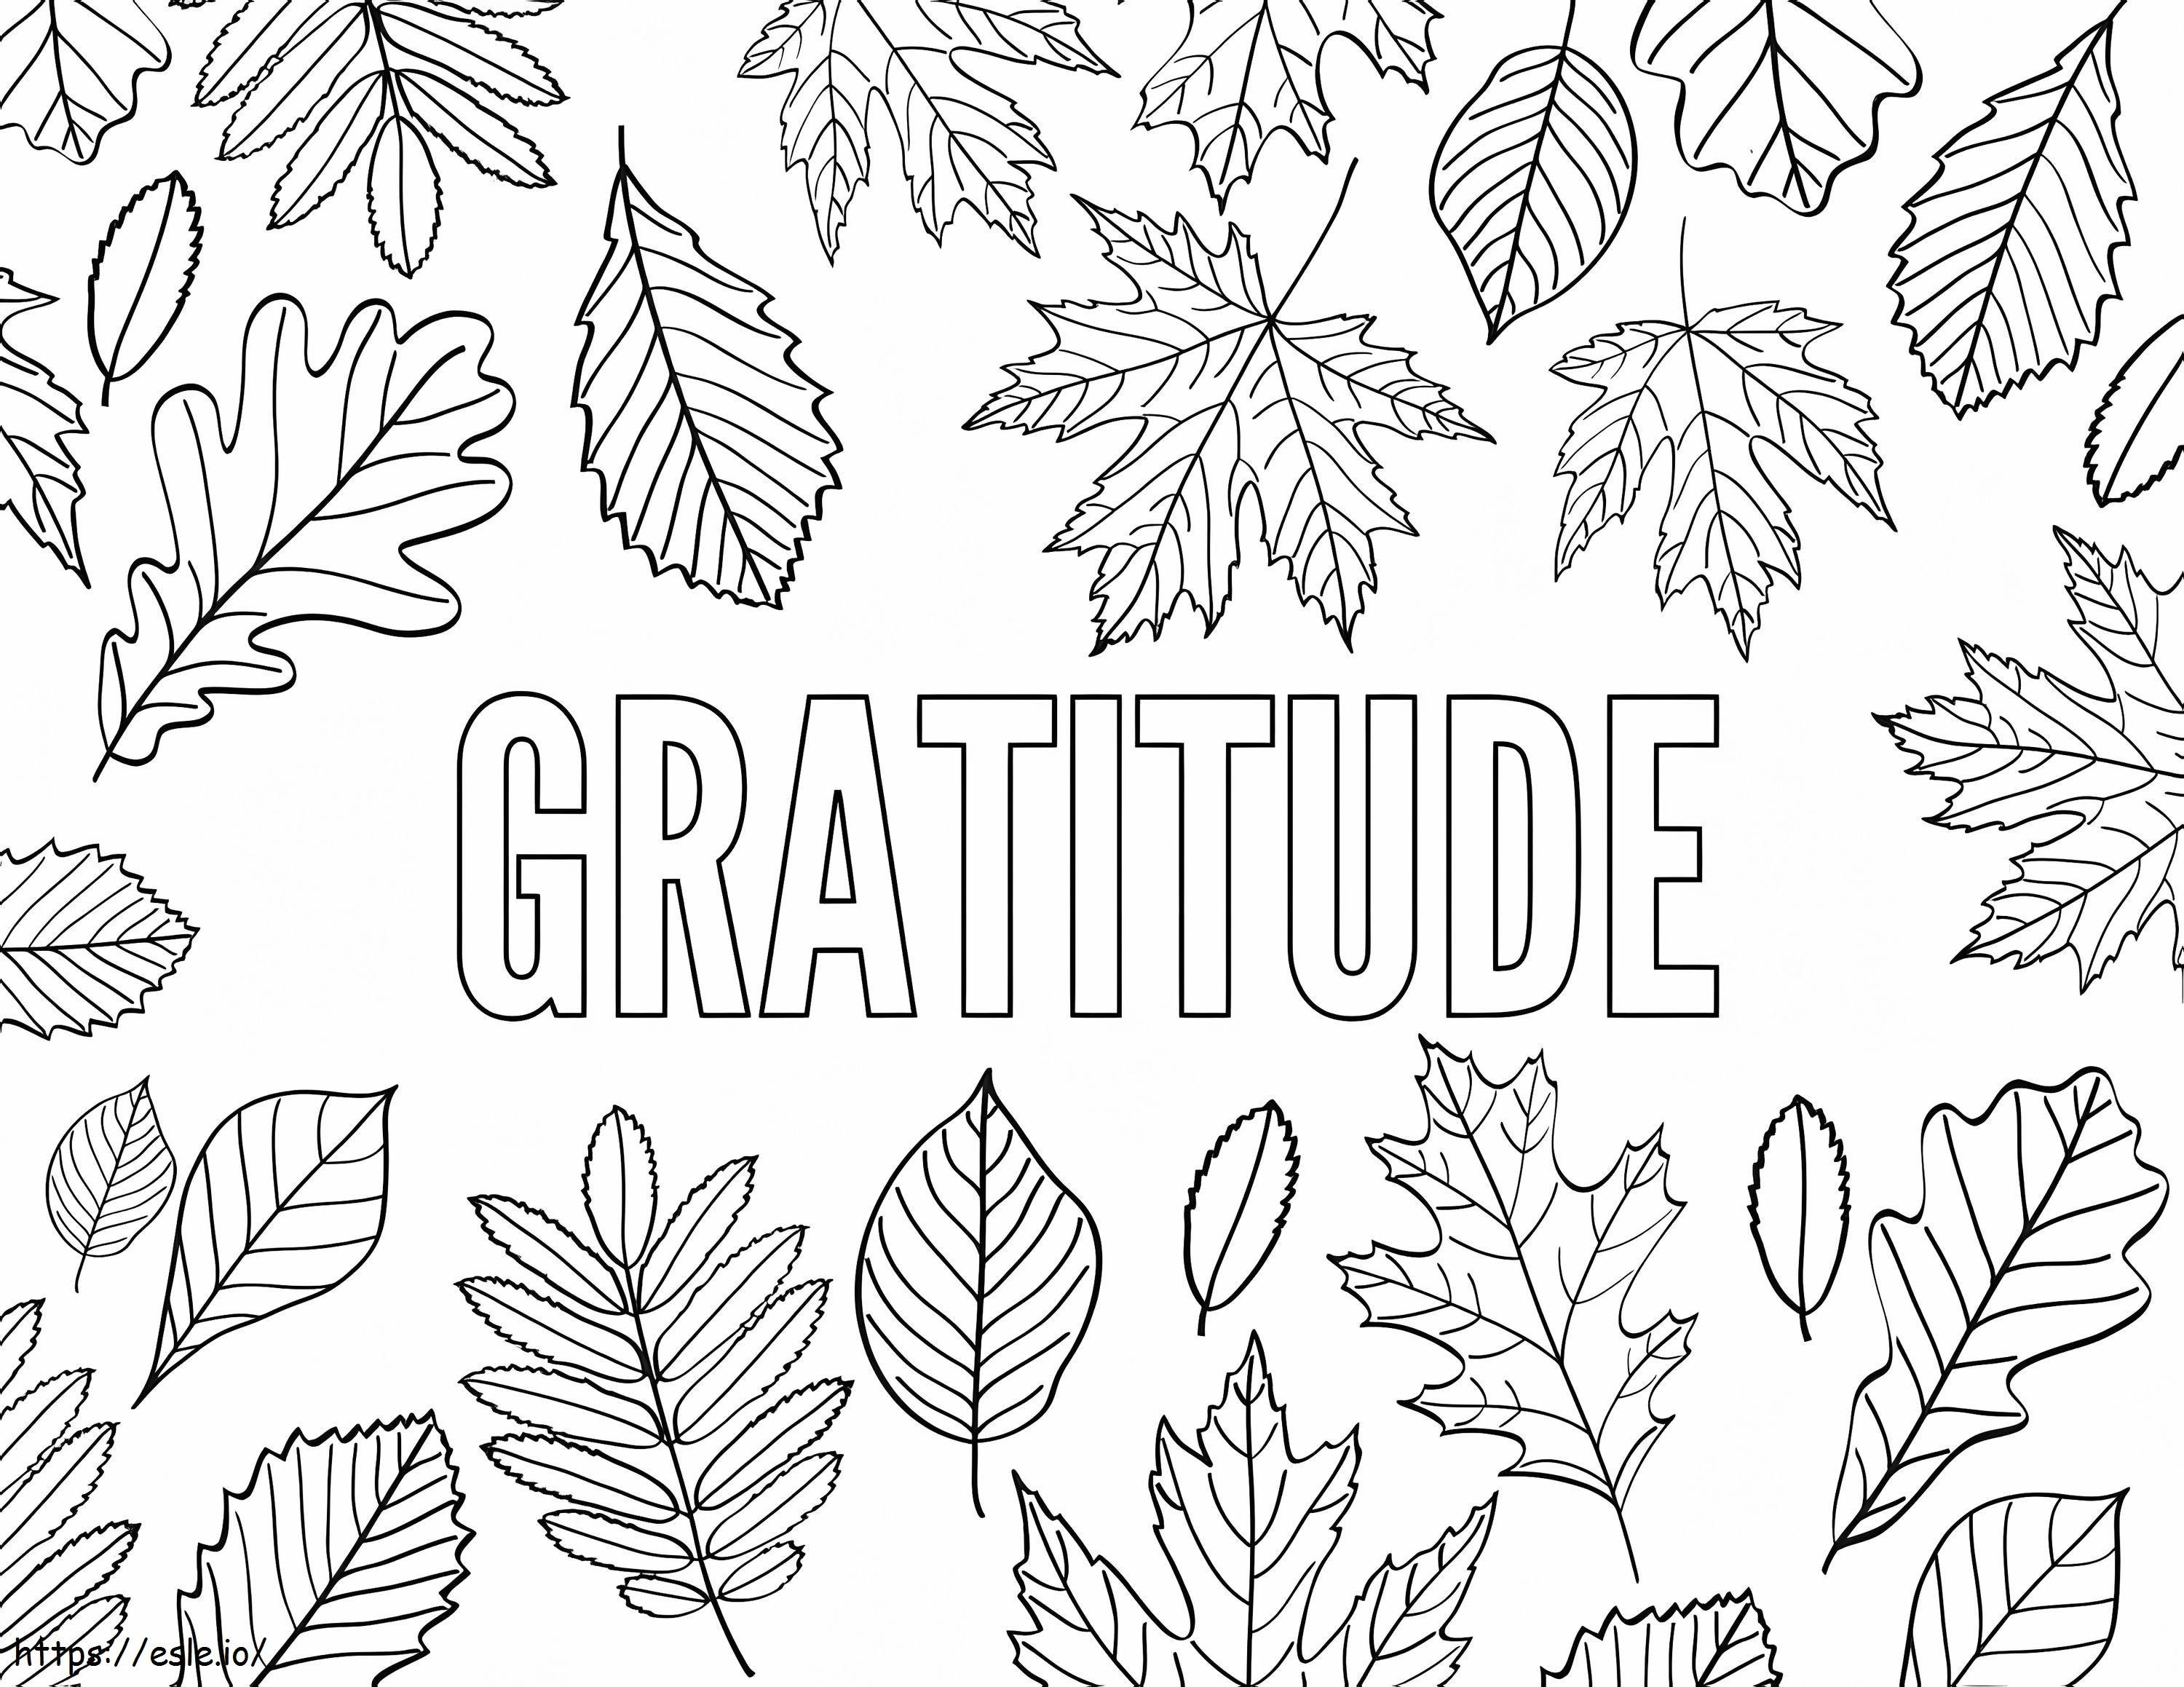 Gratitude Printable coloring page